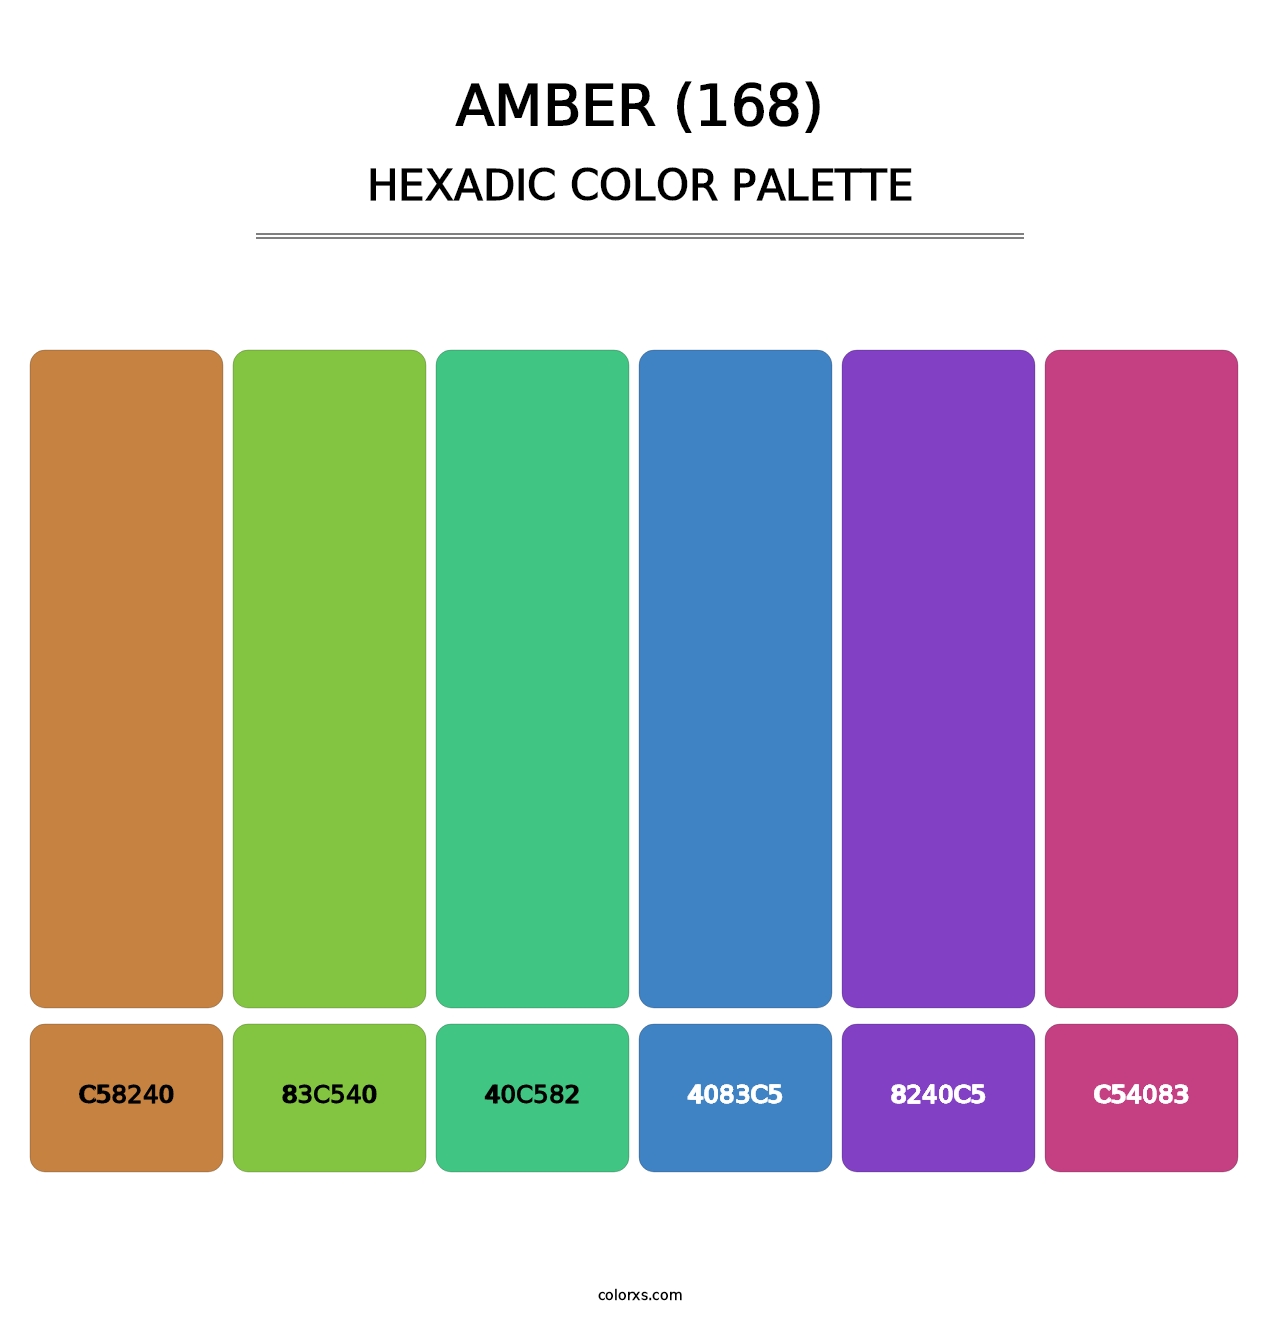 Amber (168) - Hexadic Color Palette